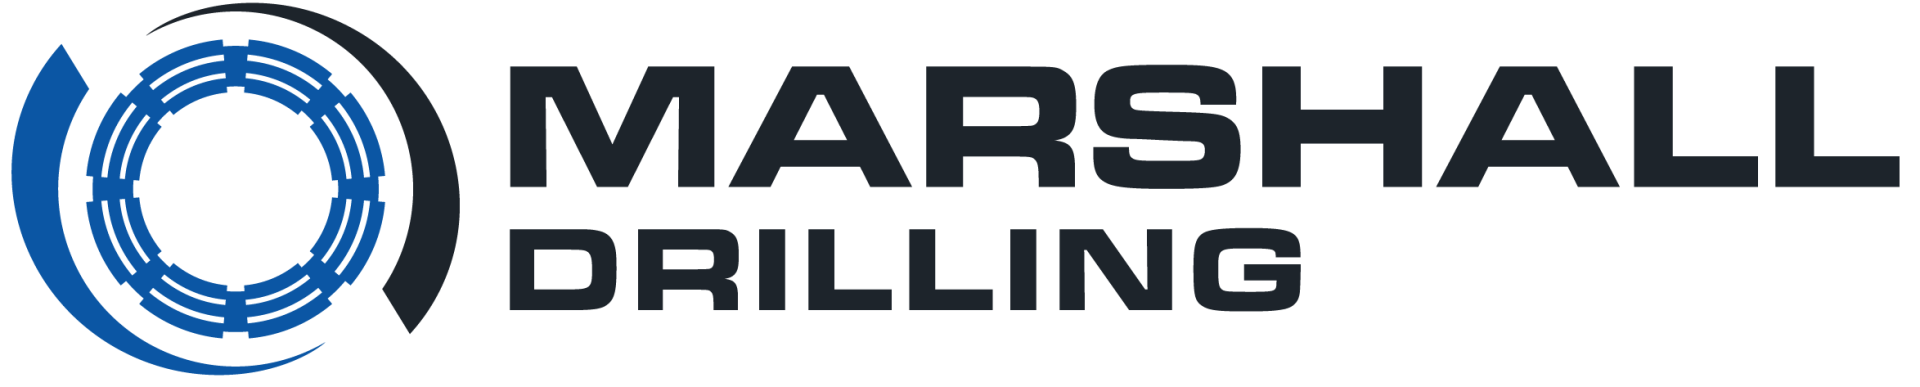 Marshall Drilling Ltd logo